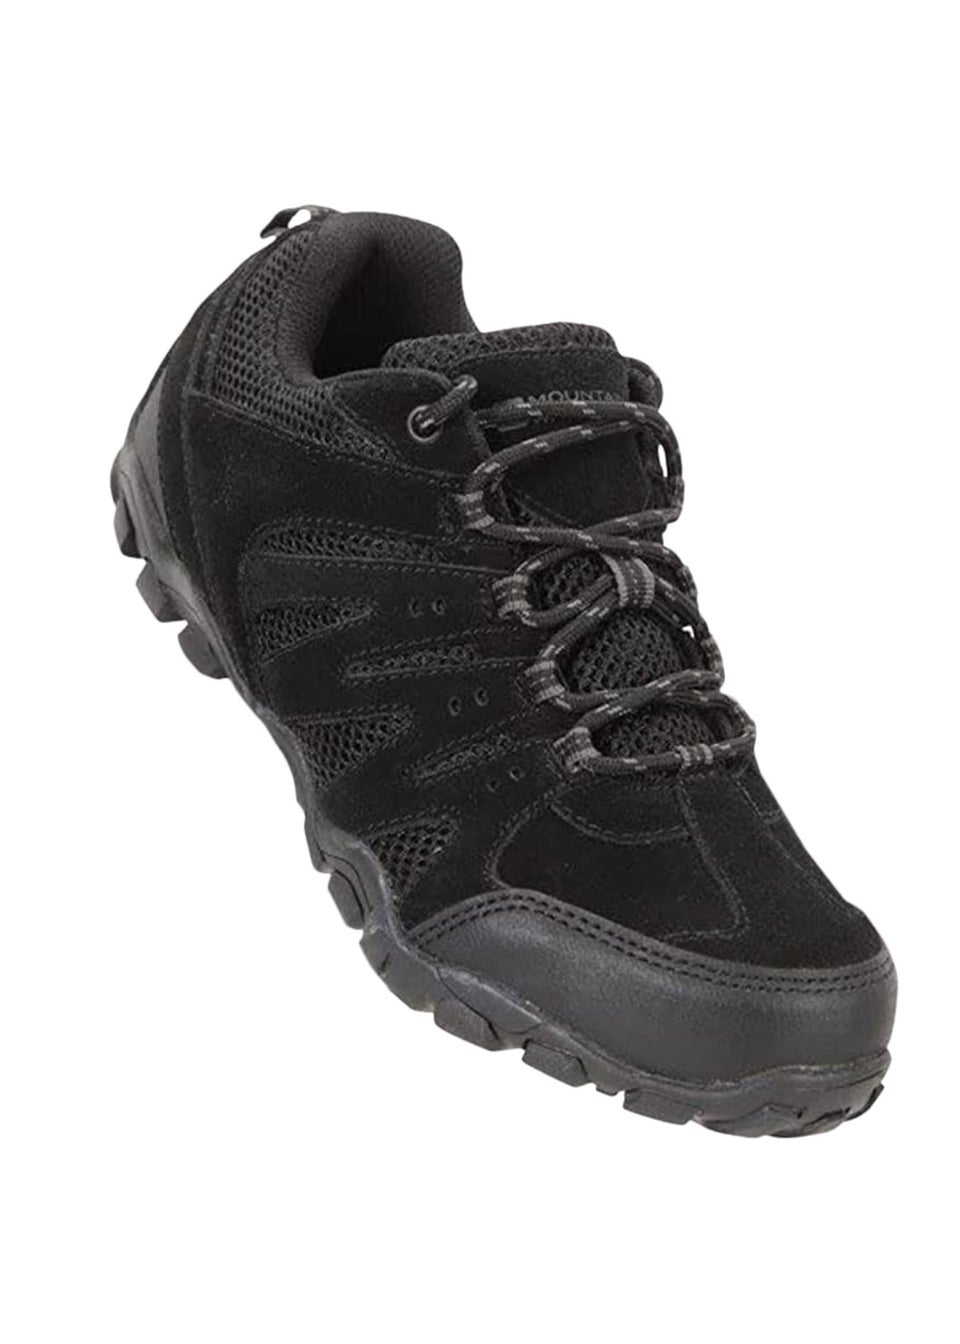 Mountain Warehouse Black Suede Outdoor Walking Shoes